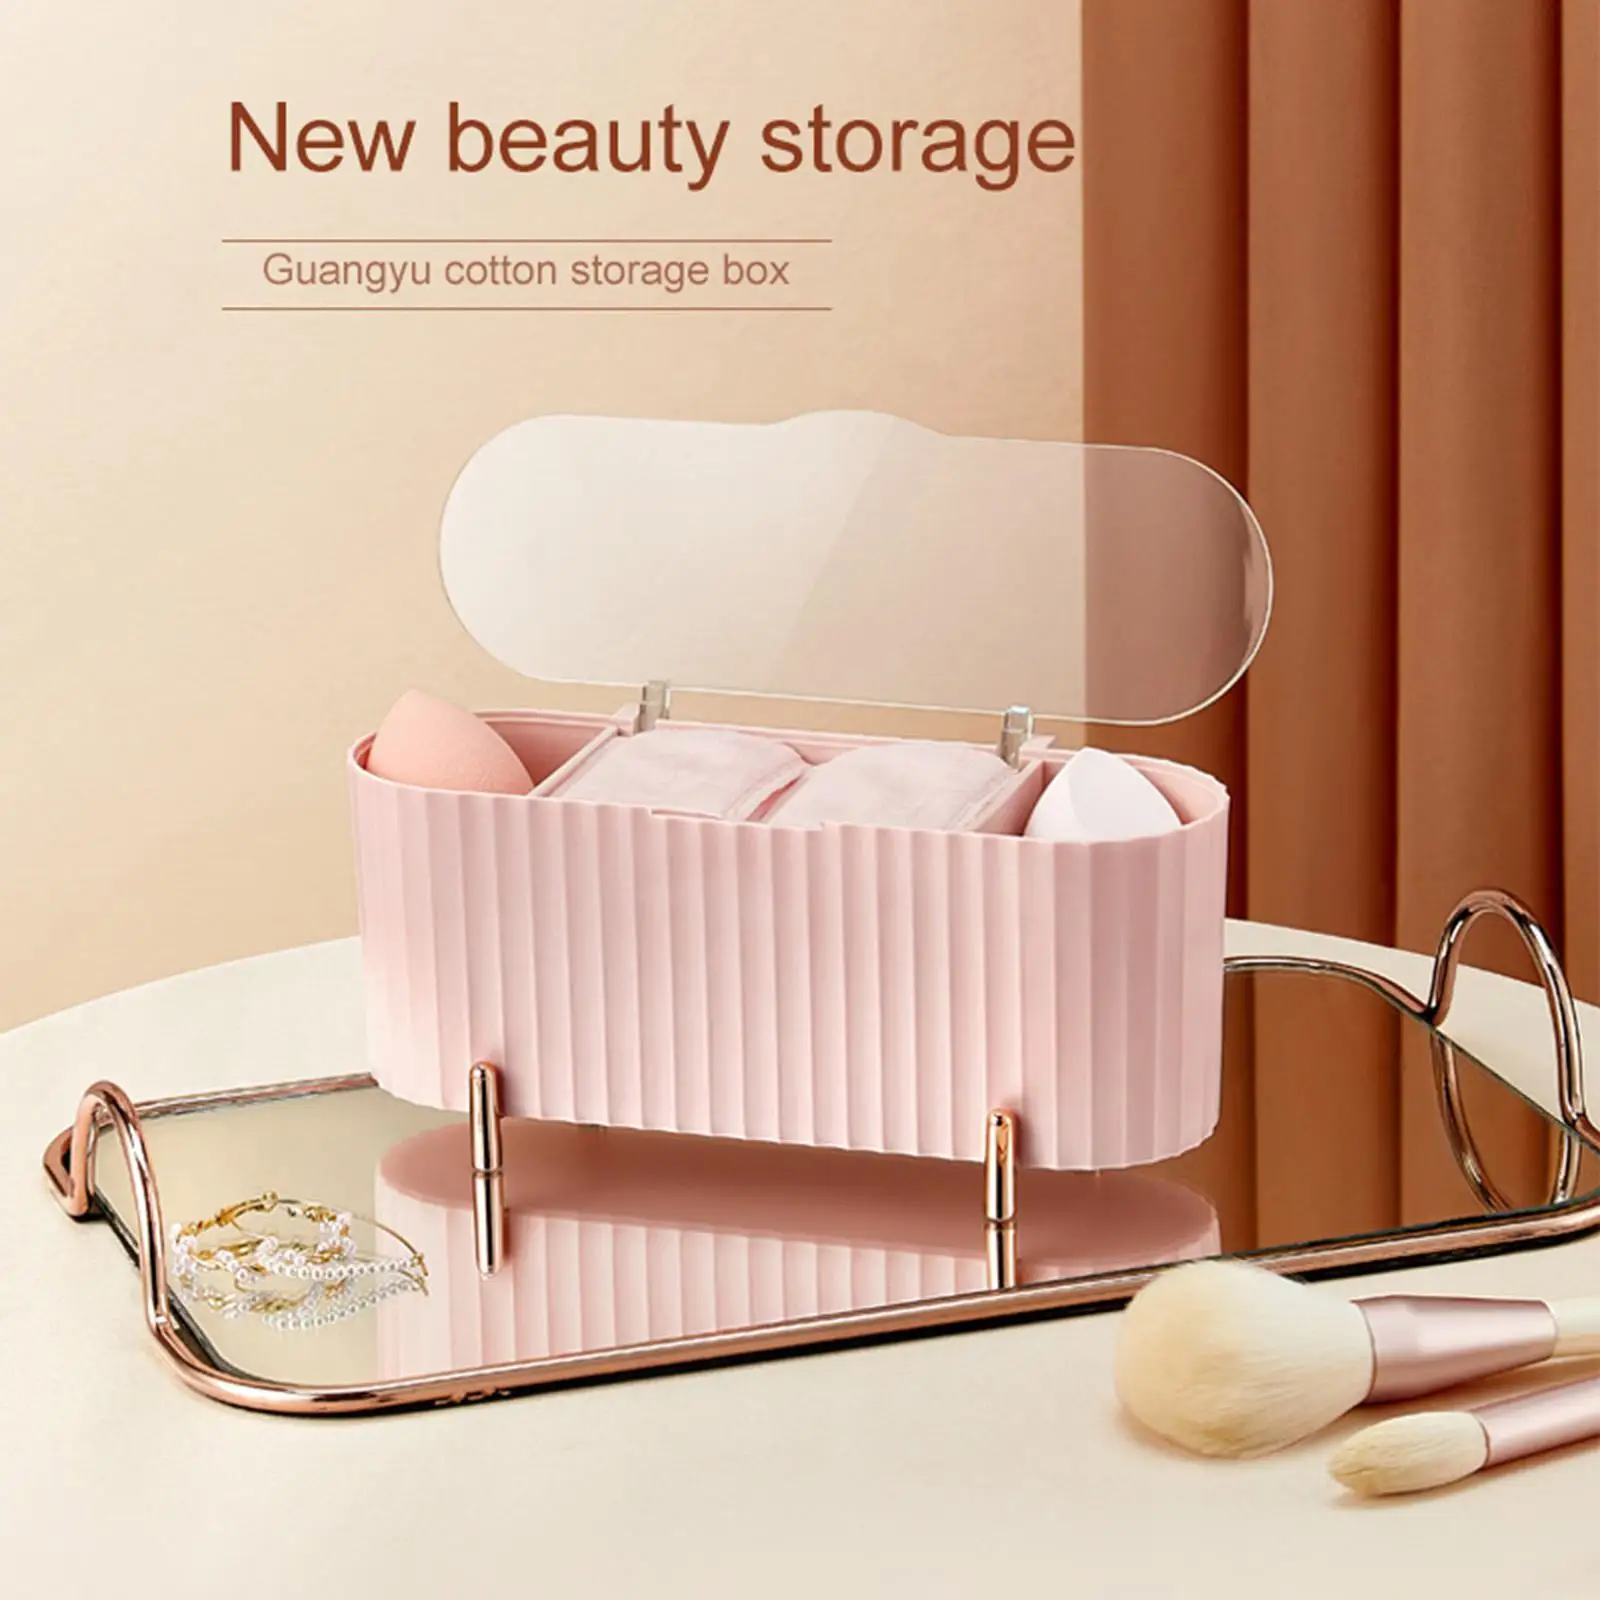 Makeup Cotton Pads Holder Case Cosmetics Storage Box Bathroom Storage Vanity Organizer Countertop Bathroom Container Desktop